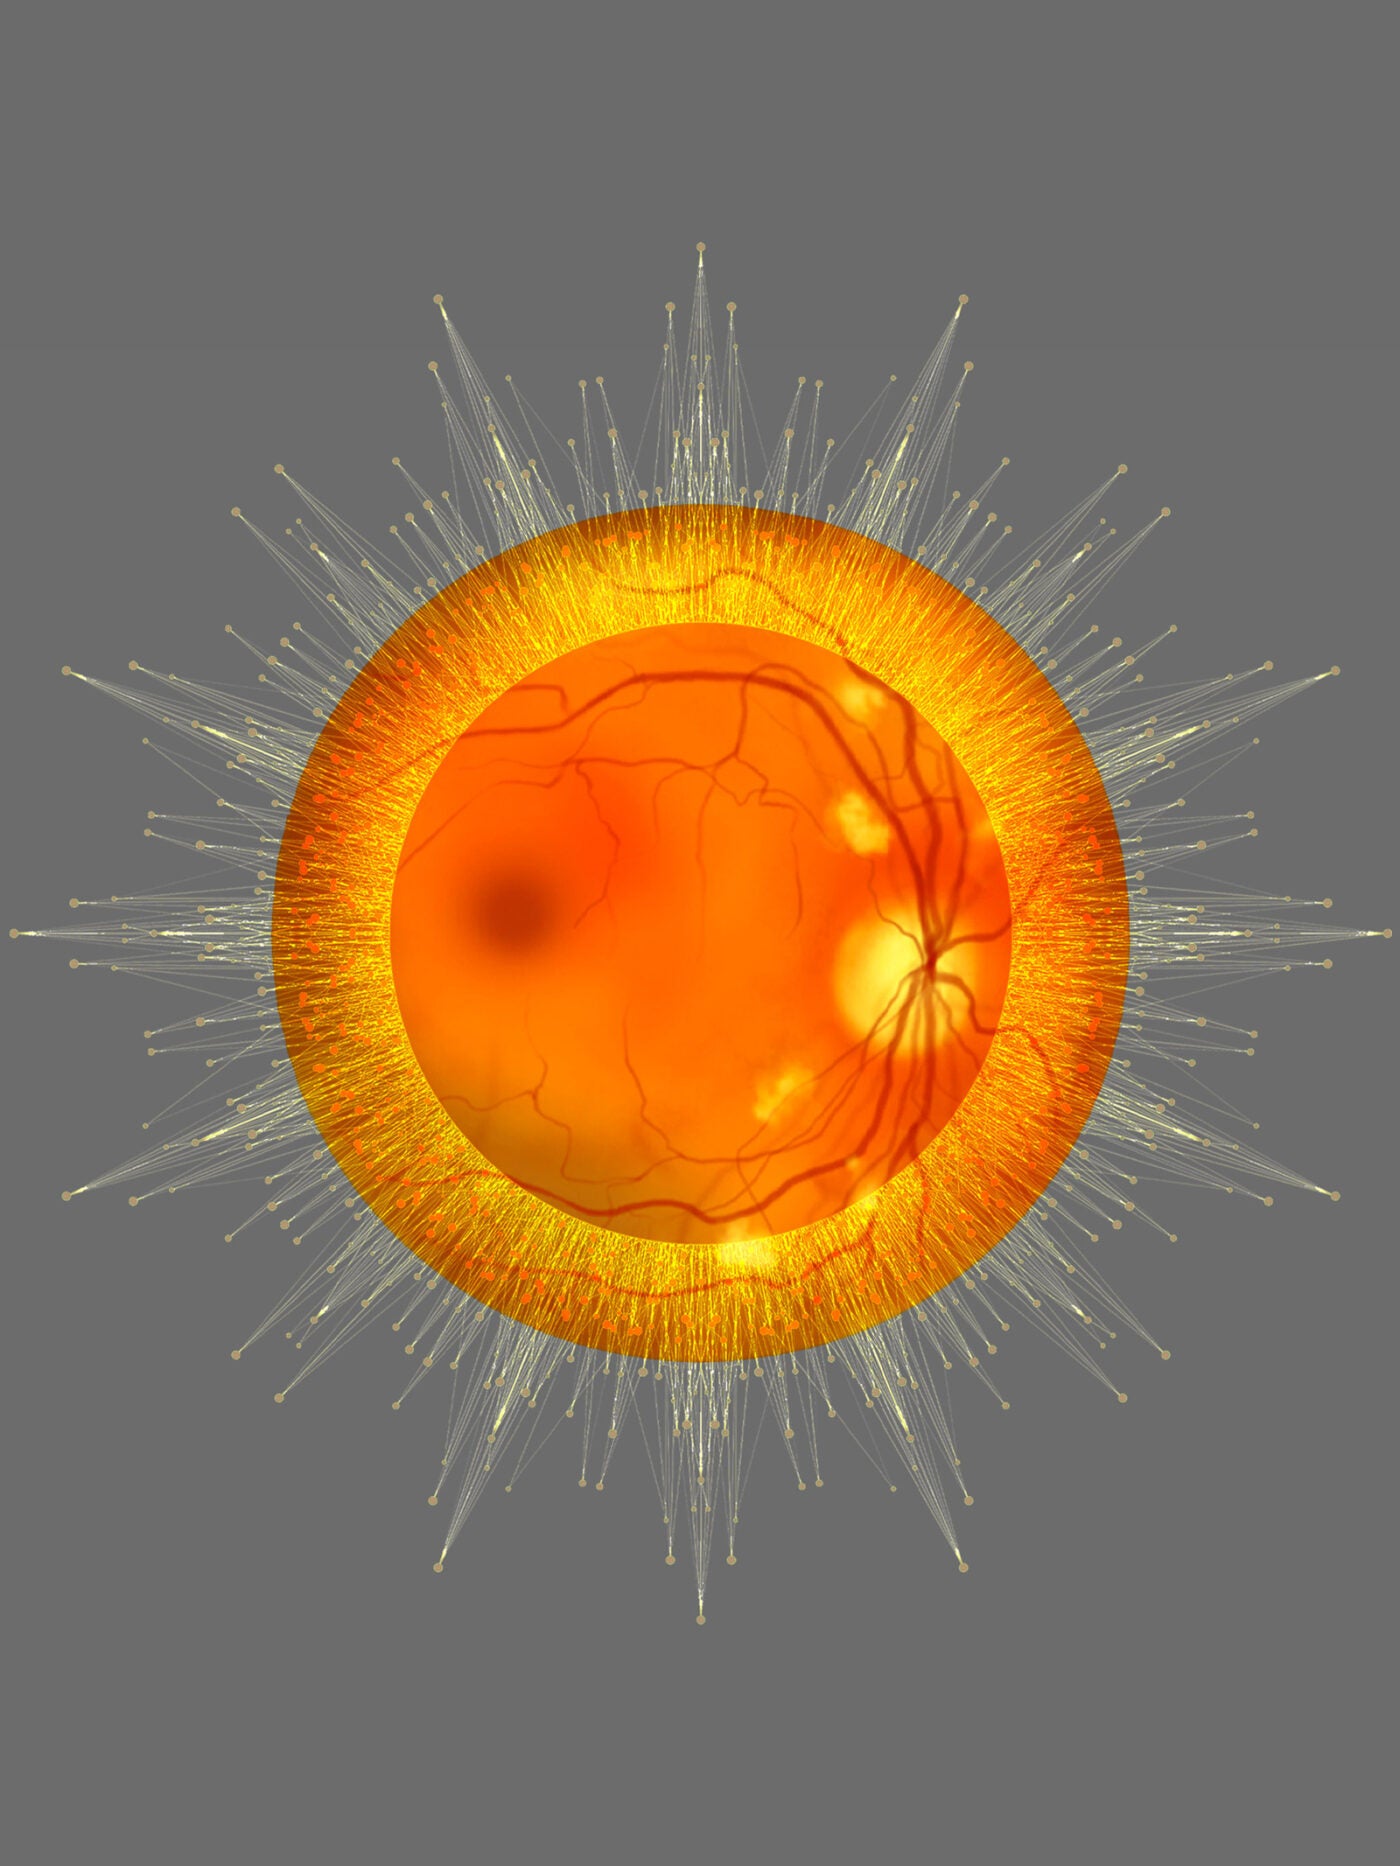 Digital illustration: Diabetic retinopathy, ophthalmoscopic diagnosis image. Yellow, data-like dots radiate around it.